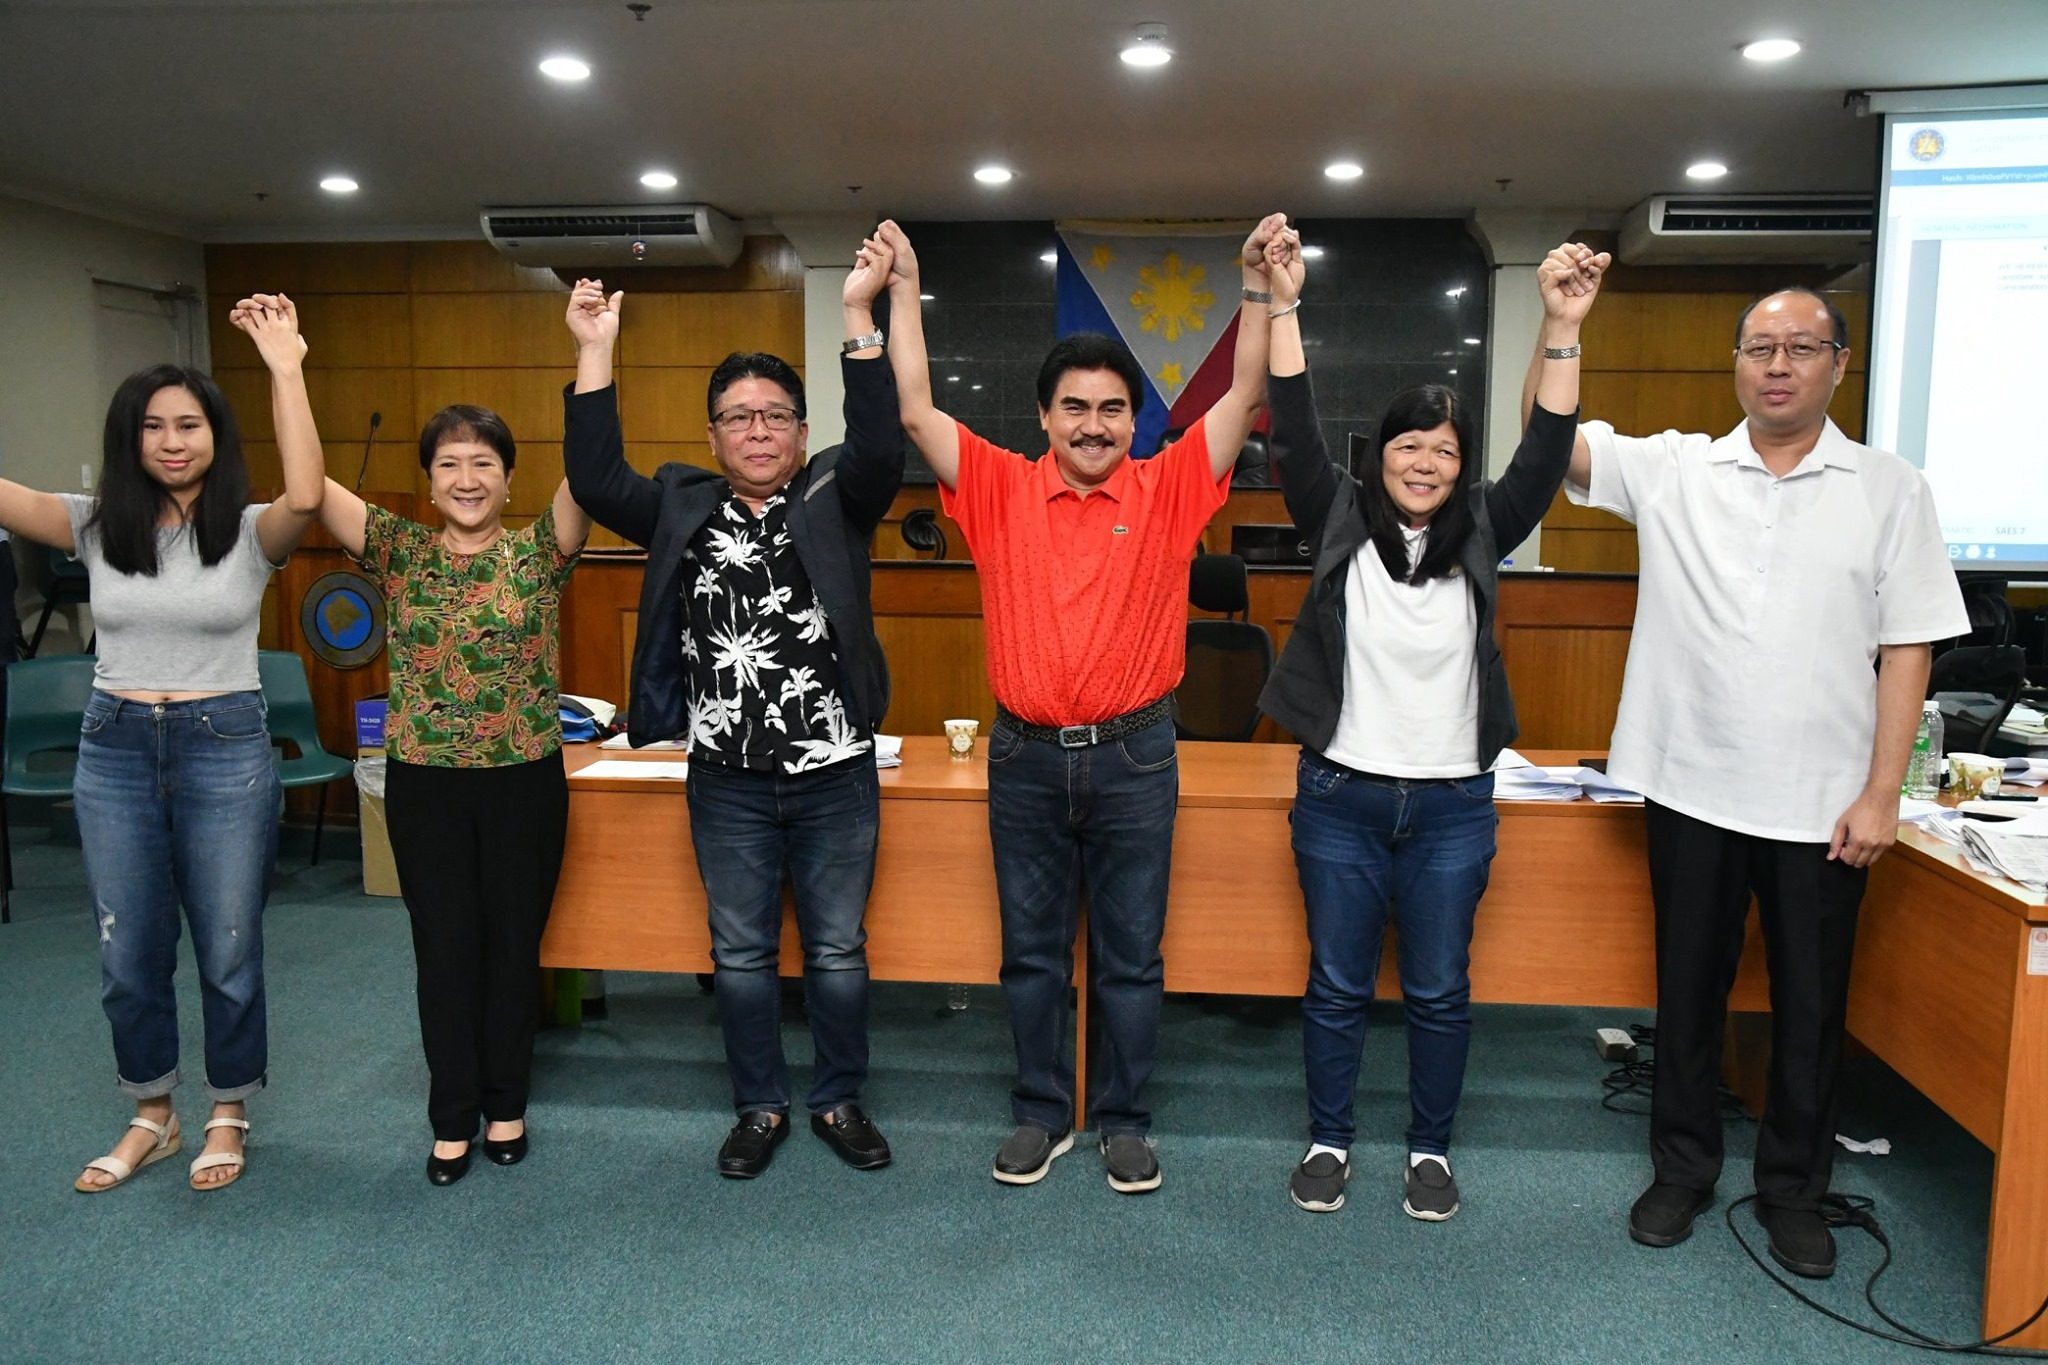 Grupo Progreso wins big in Bacolod City